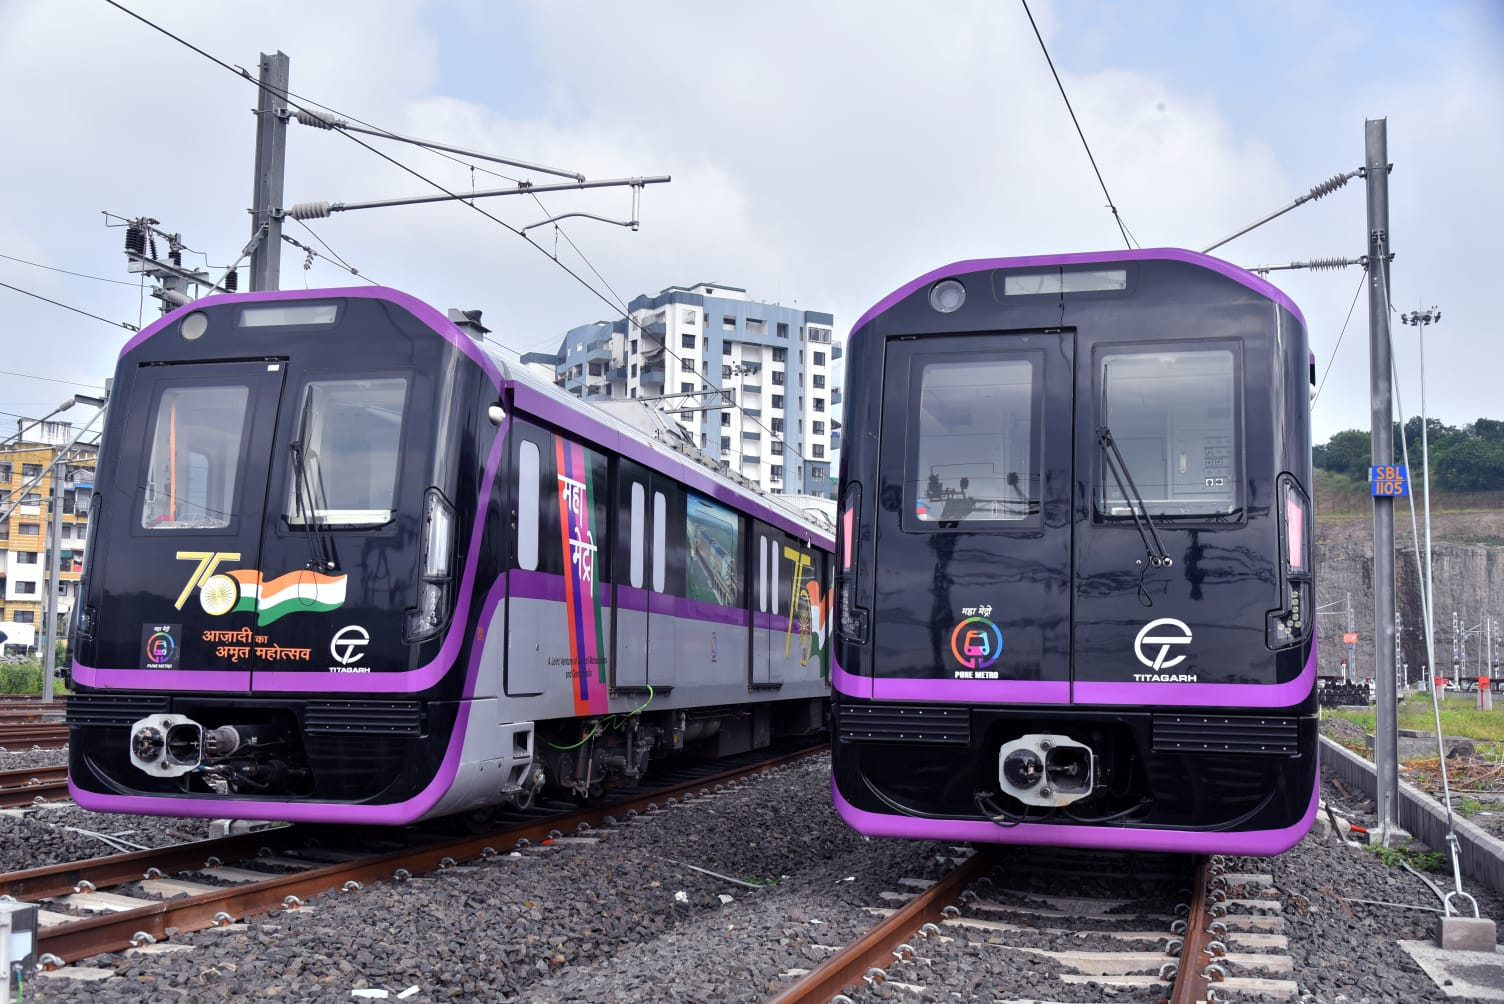 Pune Metro Line 1 (Purple Line)